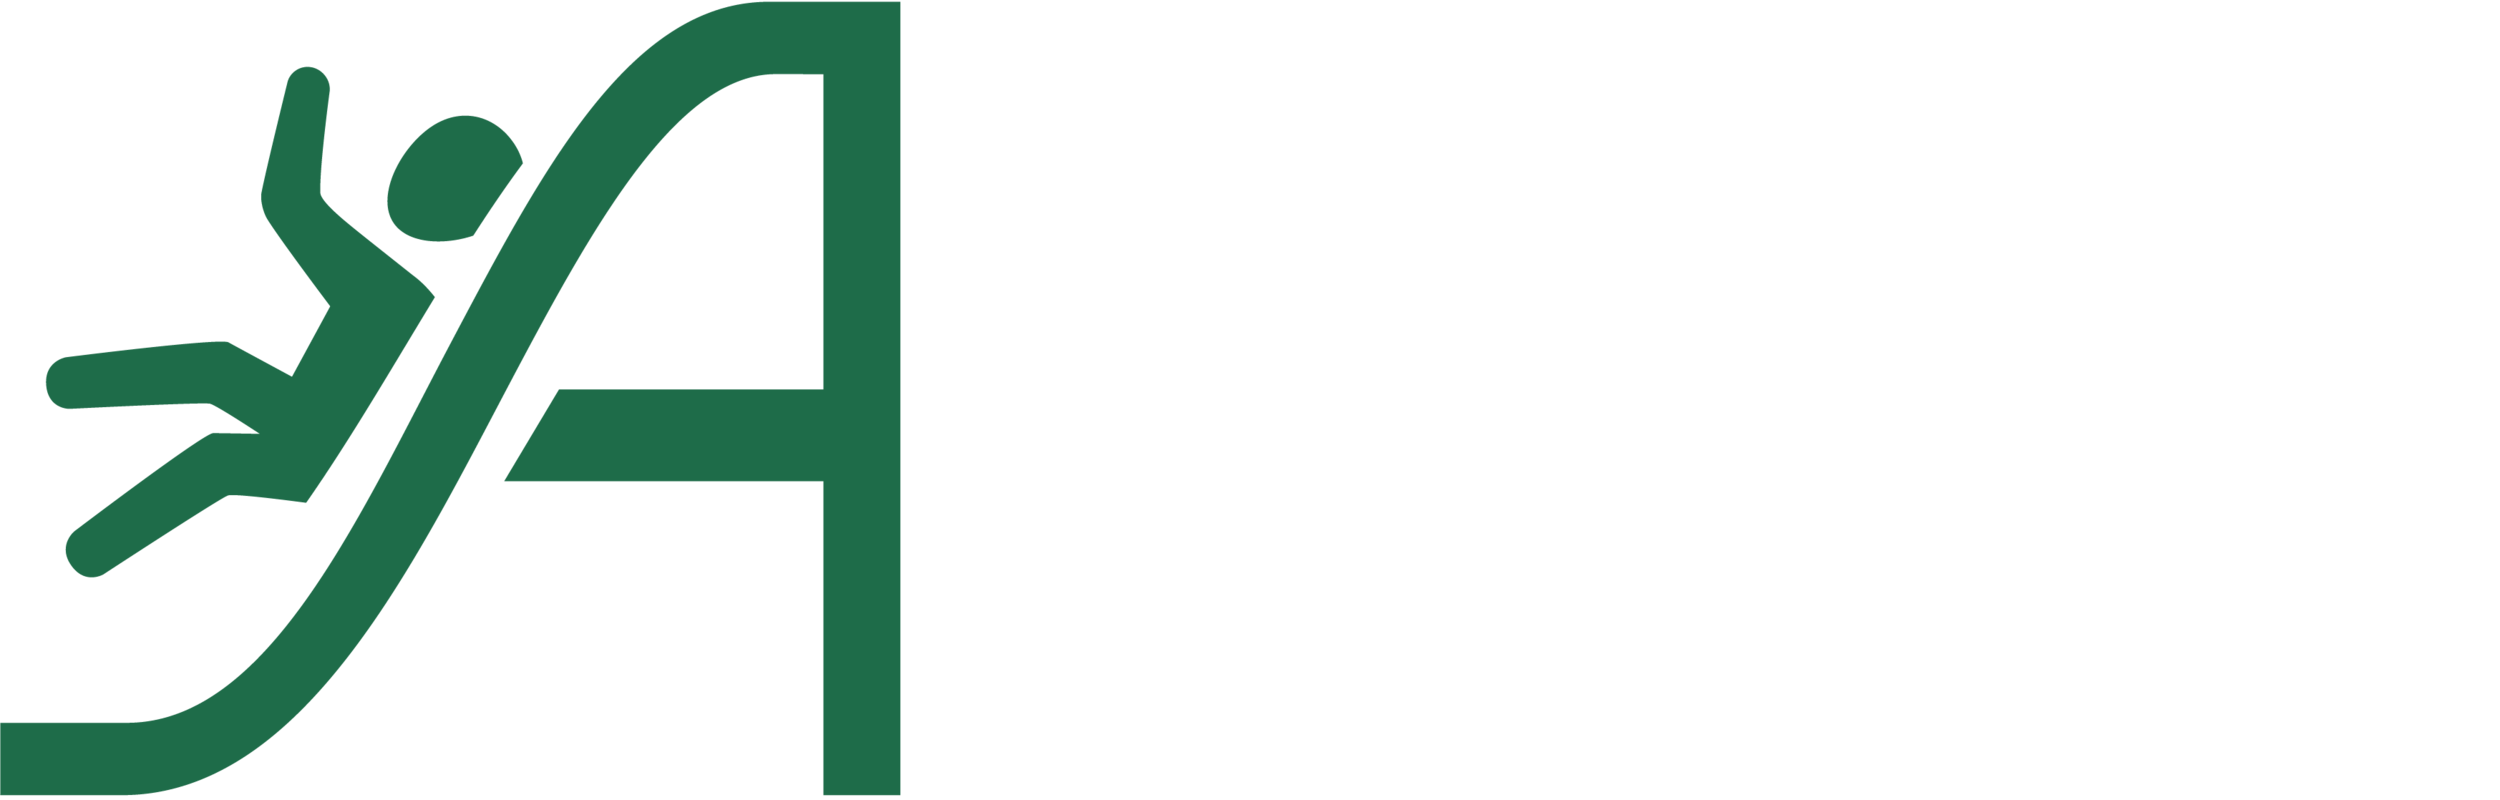 Playground Safe_WHITE LOGO.png